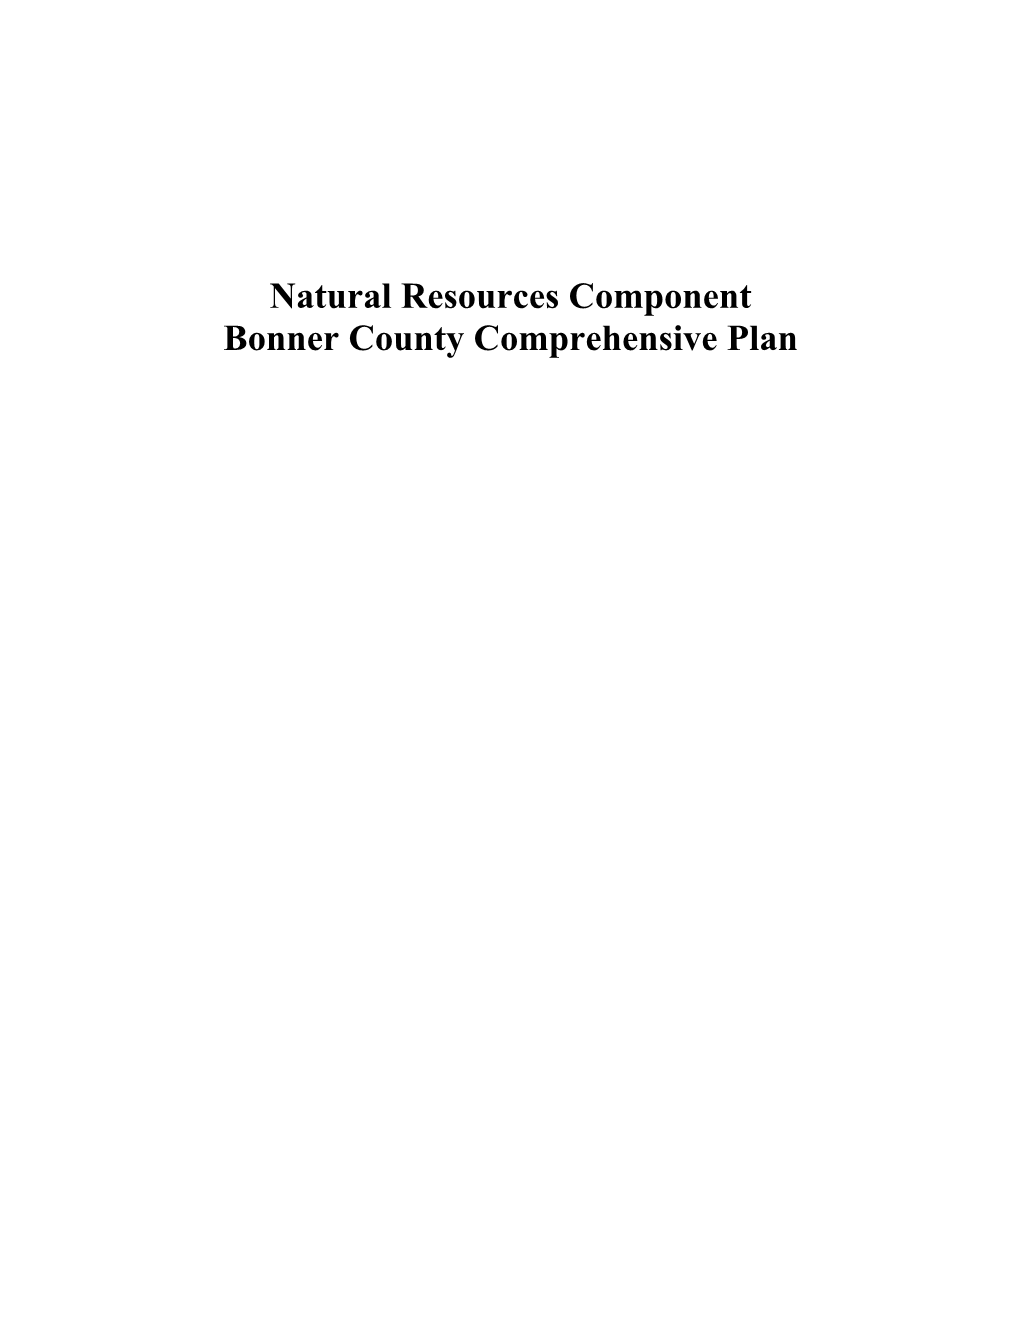 Natural Resources Component: Bonner County Comprehensive Plan